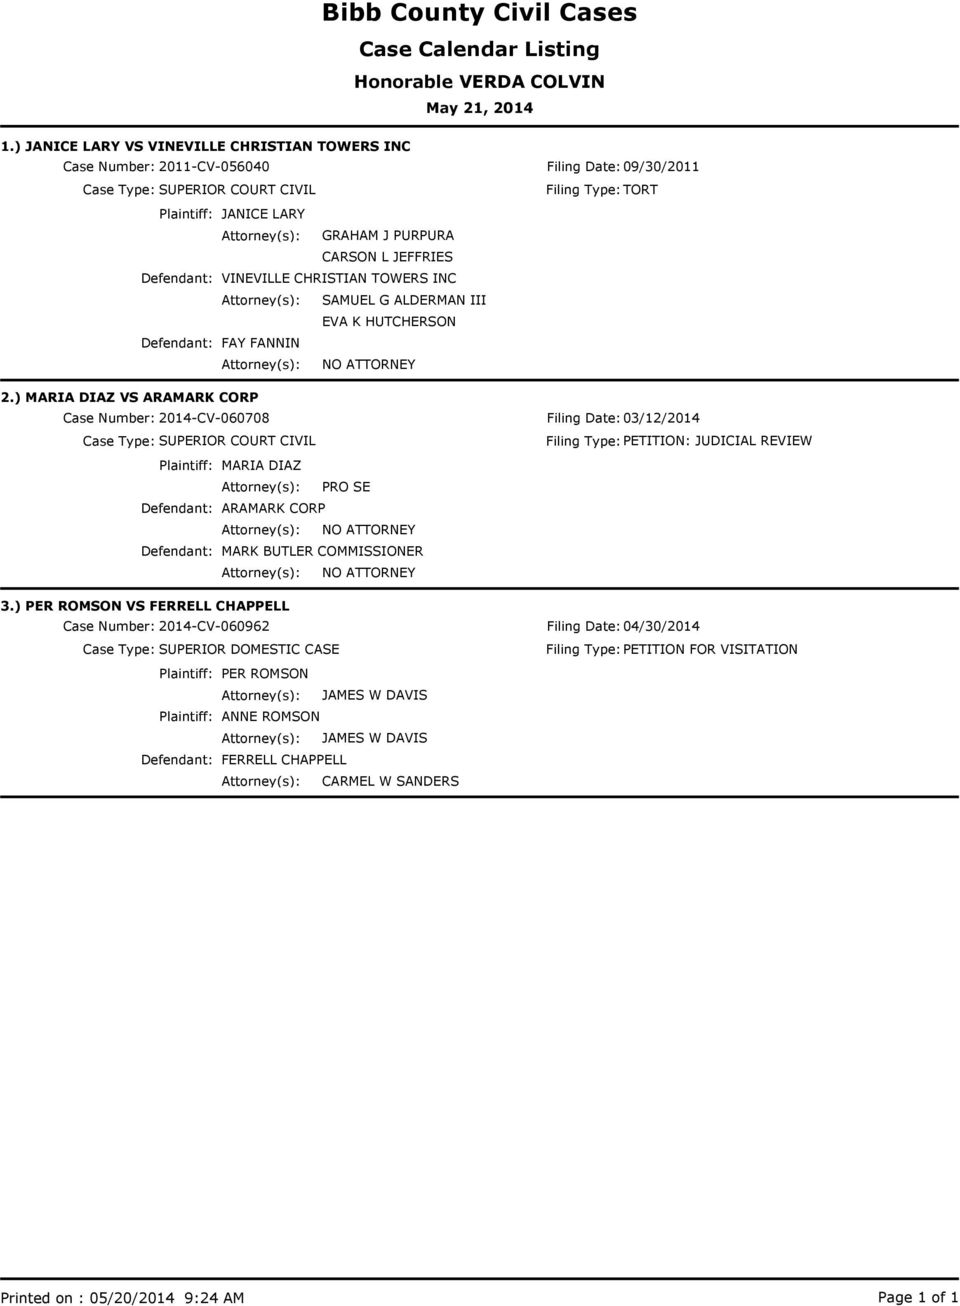 2014-CV-060708 Filing Date: 03/12/2014 Case Type: SUPERIOR COURT CIVIL MARIA DIAZ ARAMARK CORP PRO SE MARK BUTLER COMMISSIONER 3.